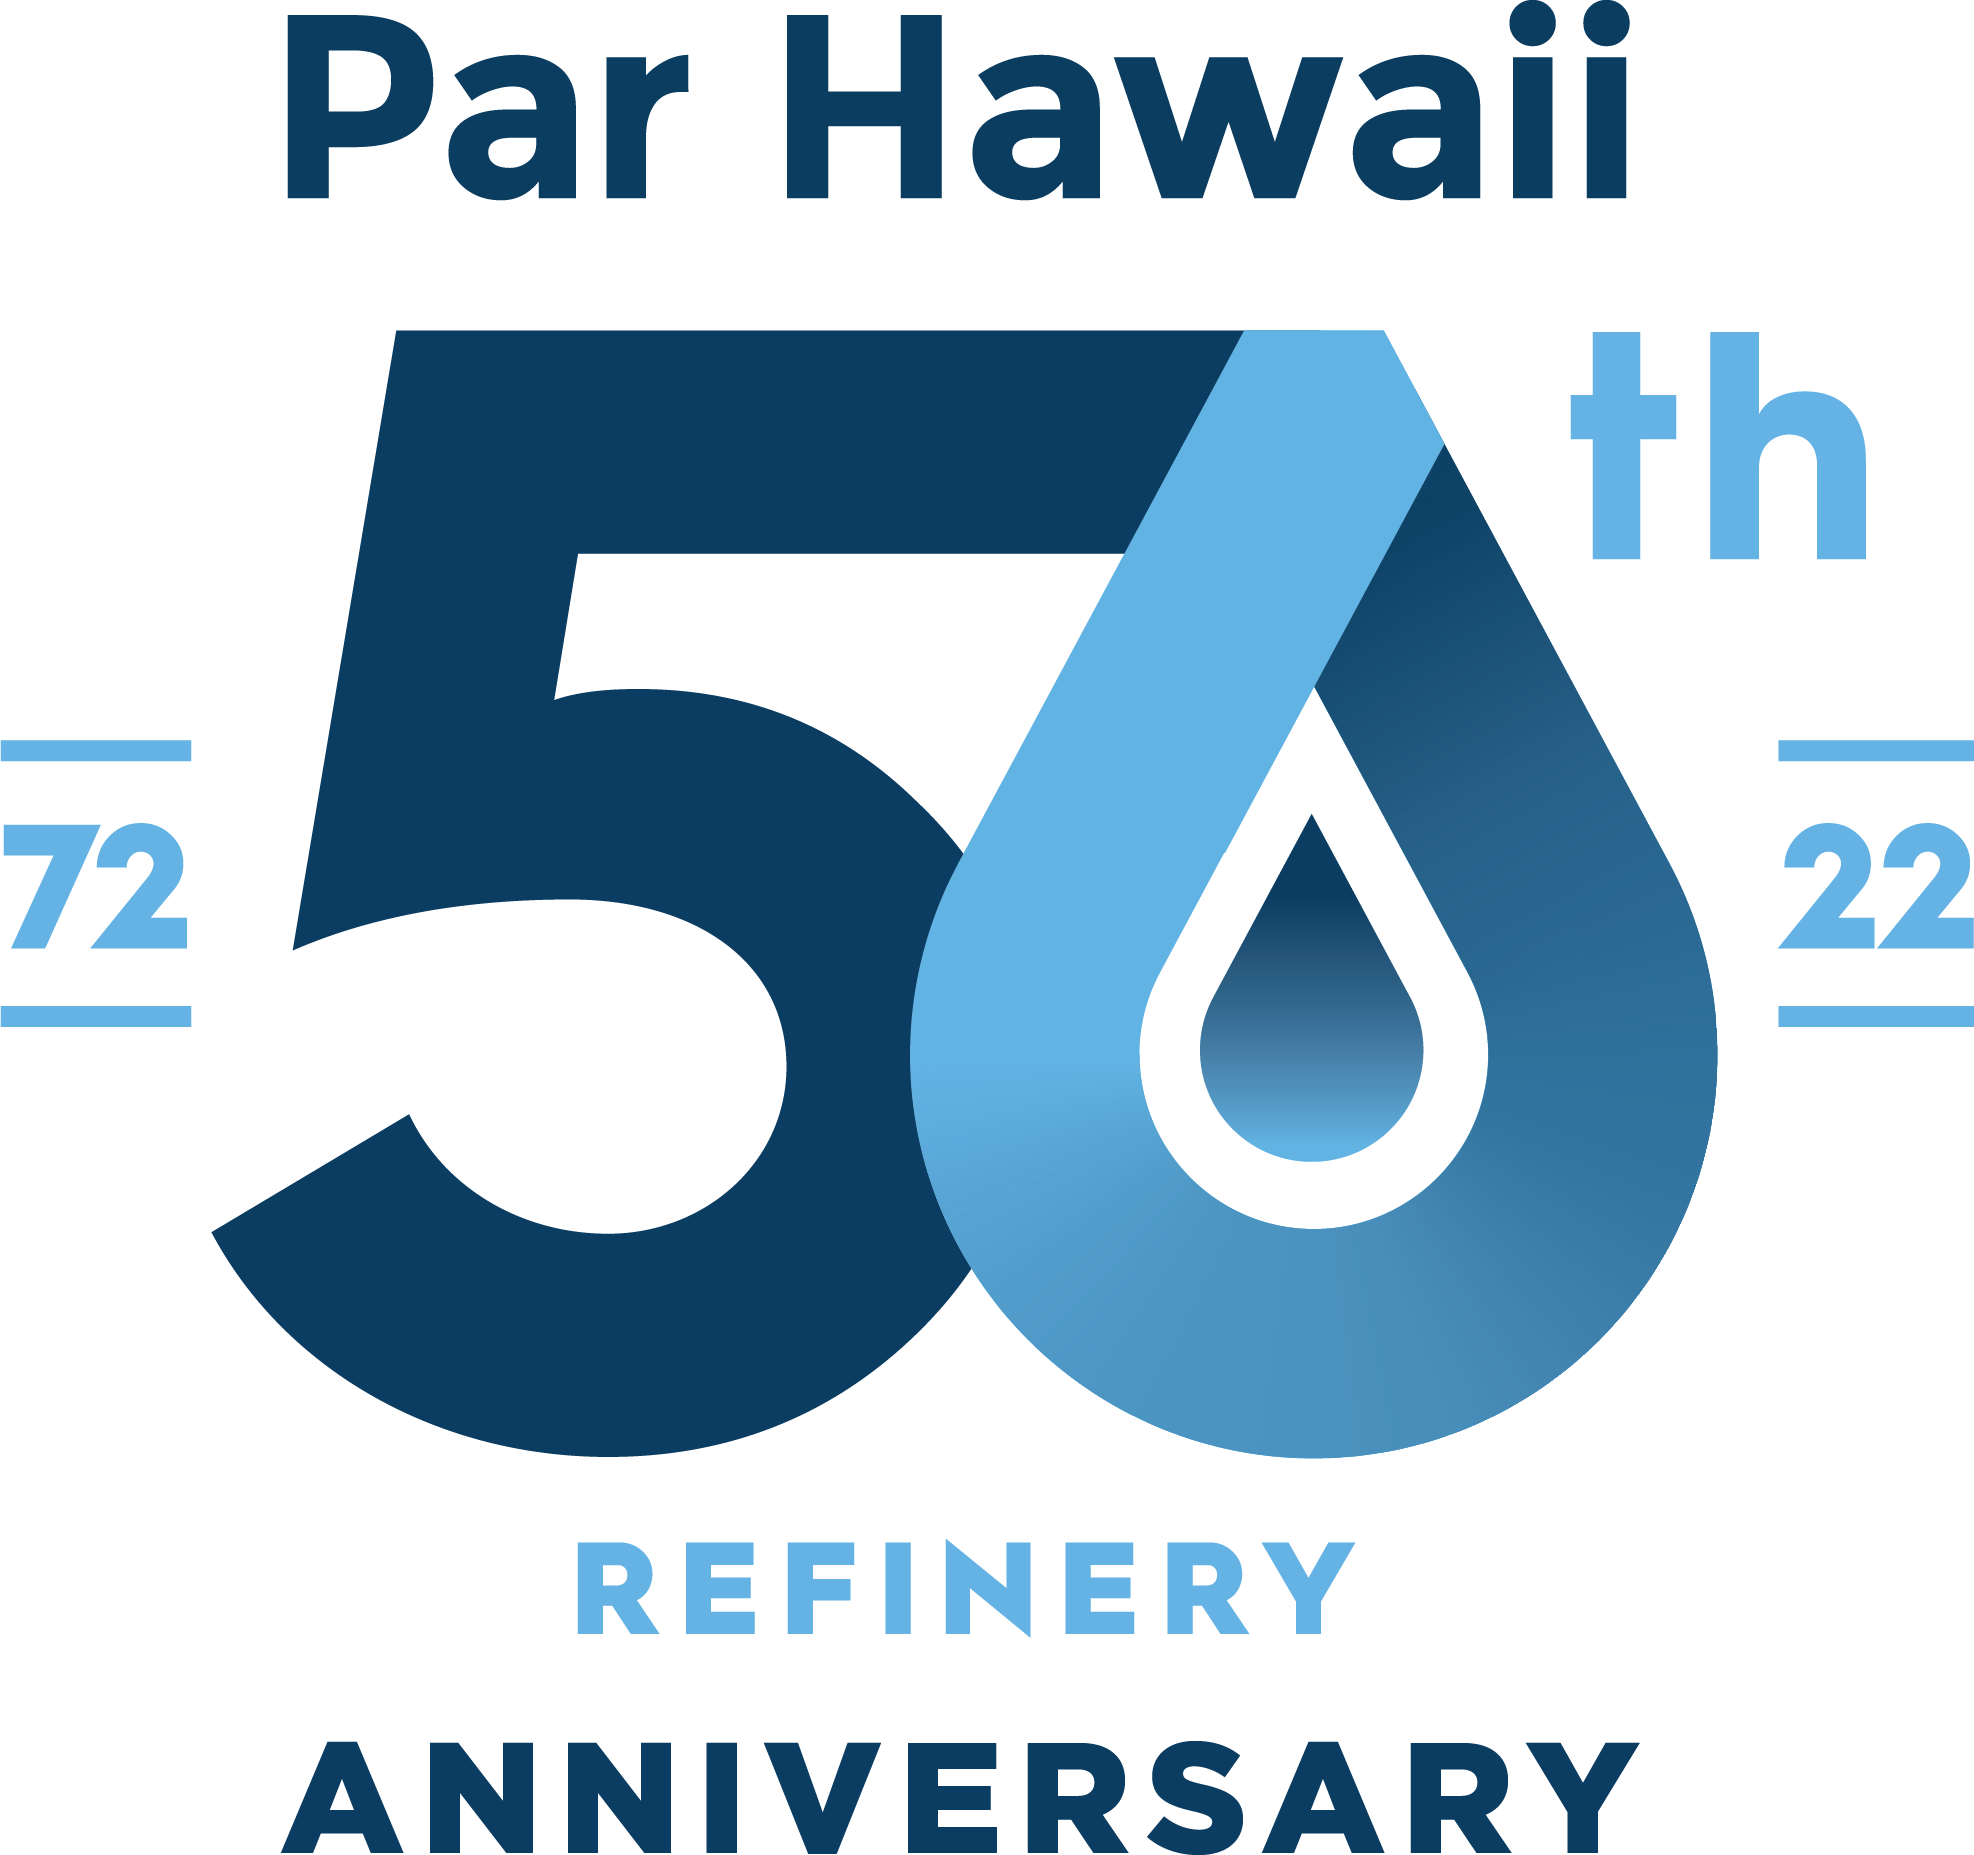 Par Hawaii Refinery - 50th Anniversary